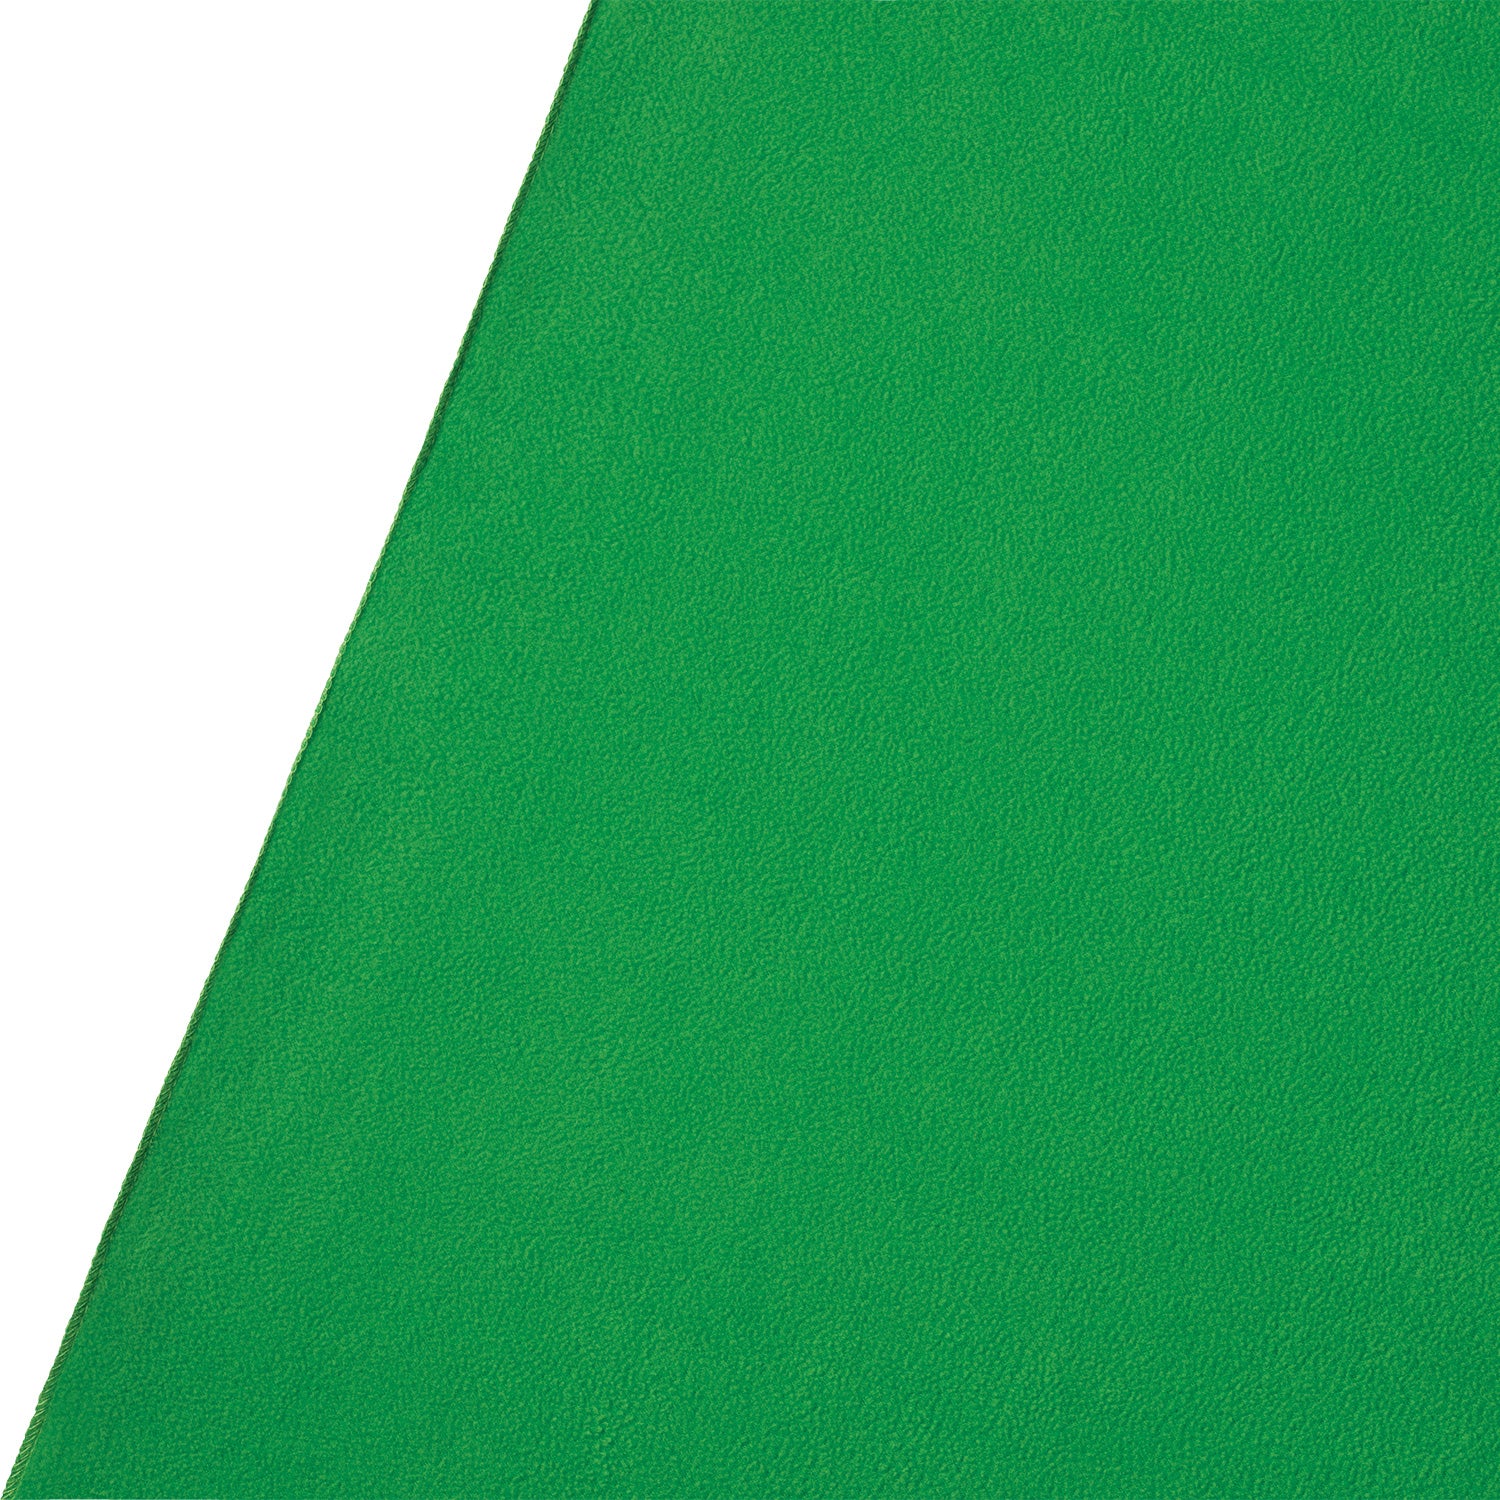 X-Drop Wrinkle-Resistant Backdrop - Chroma-Key Green Screen (5' x 7')